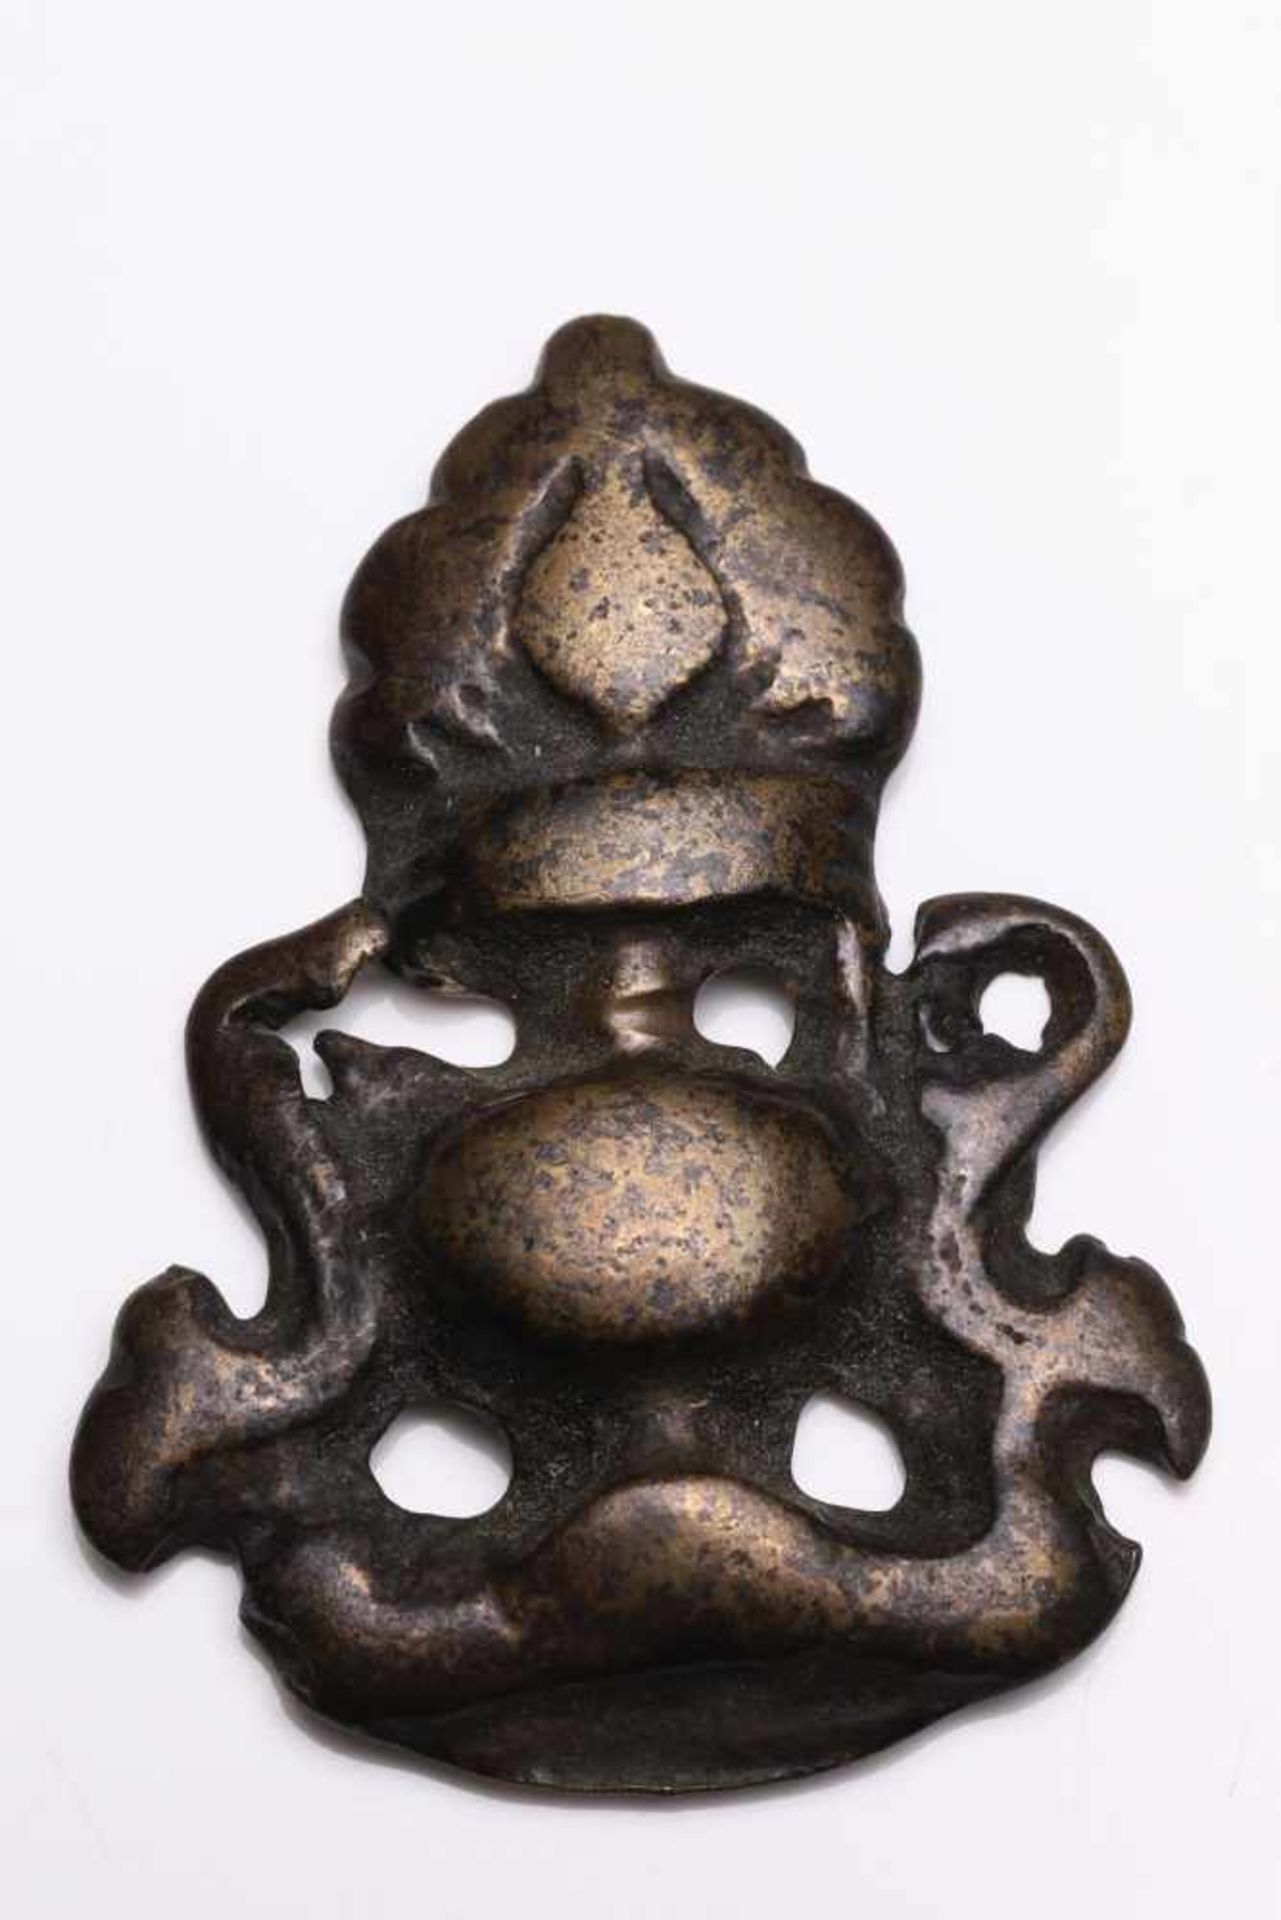 THOKCHA IN FORM OF "THE VASE OF TREASURE"BronzeTibet , 14th centuryDimensions: Height 4 cmWeight: 10